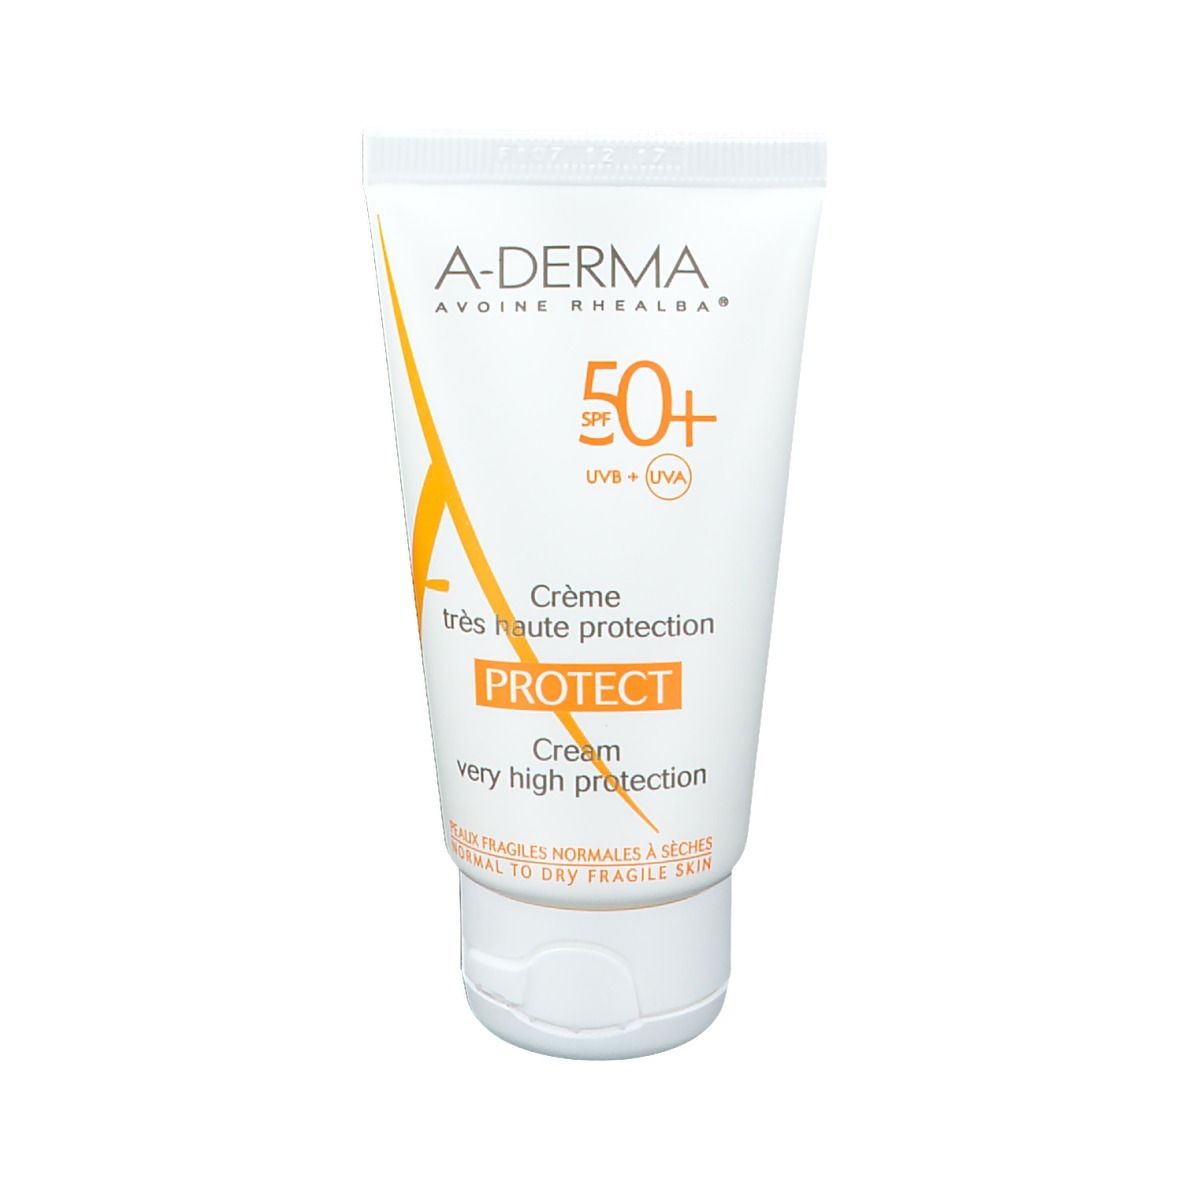 A-Derma Protect Creme LSF 50+